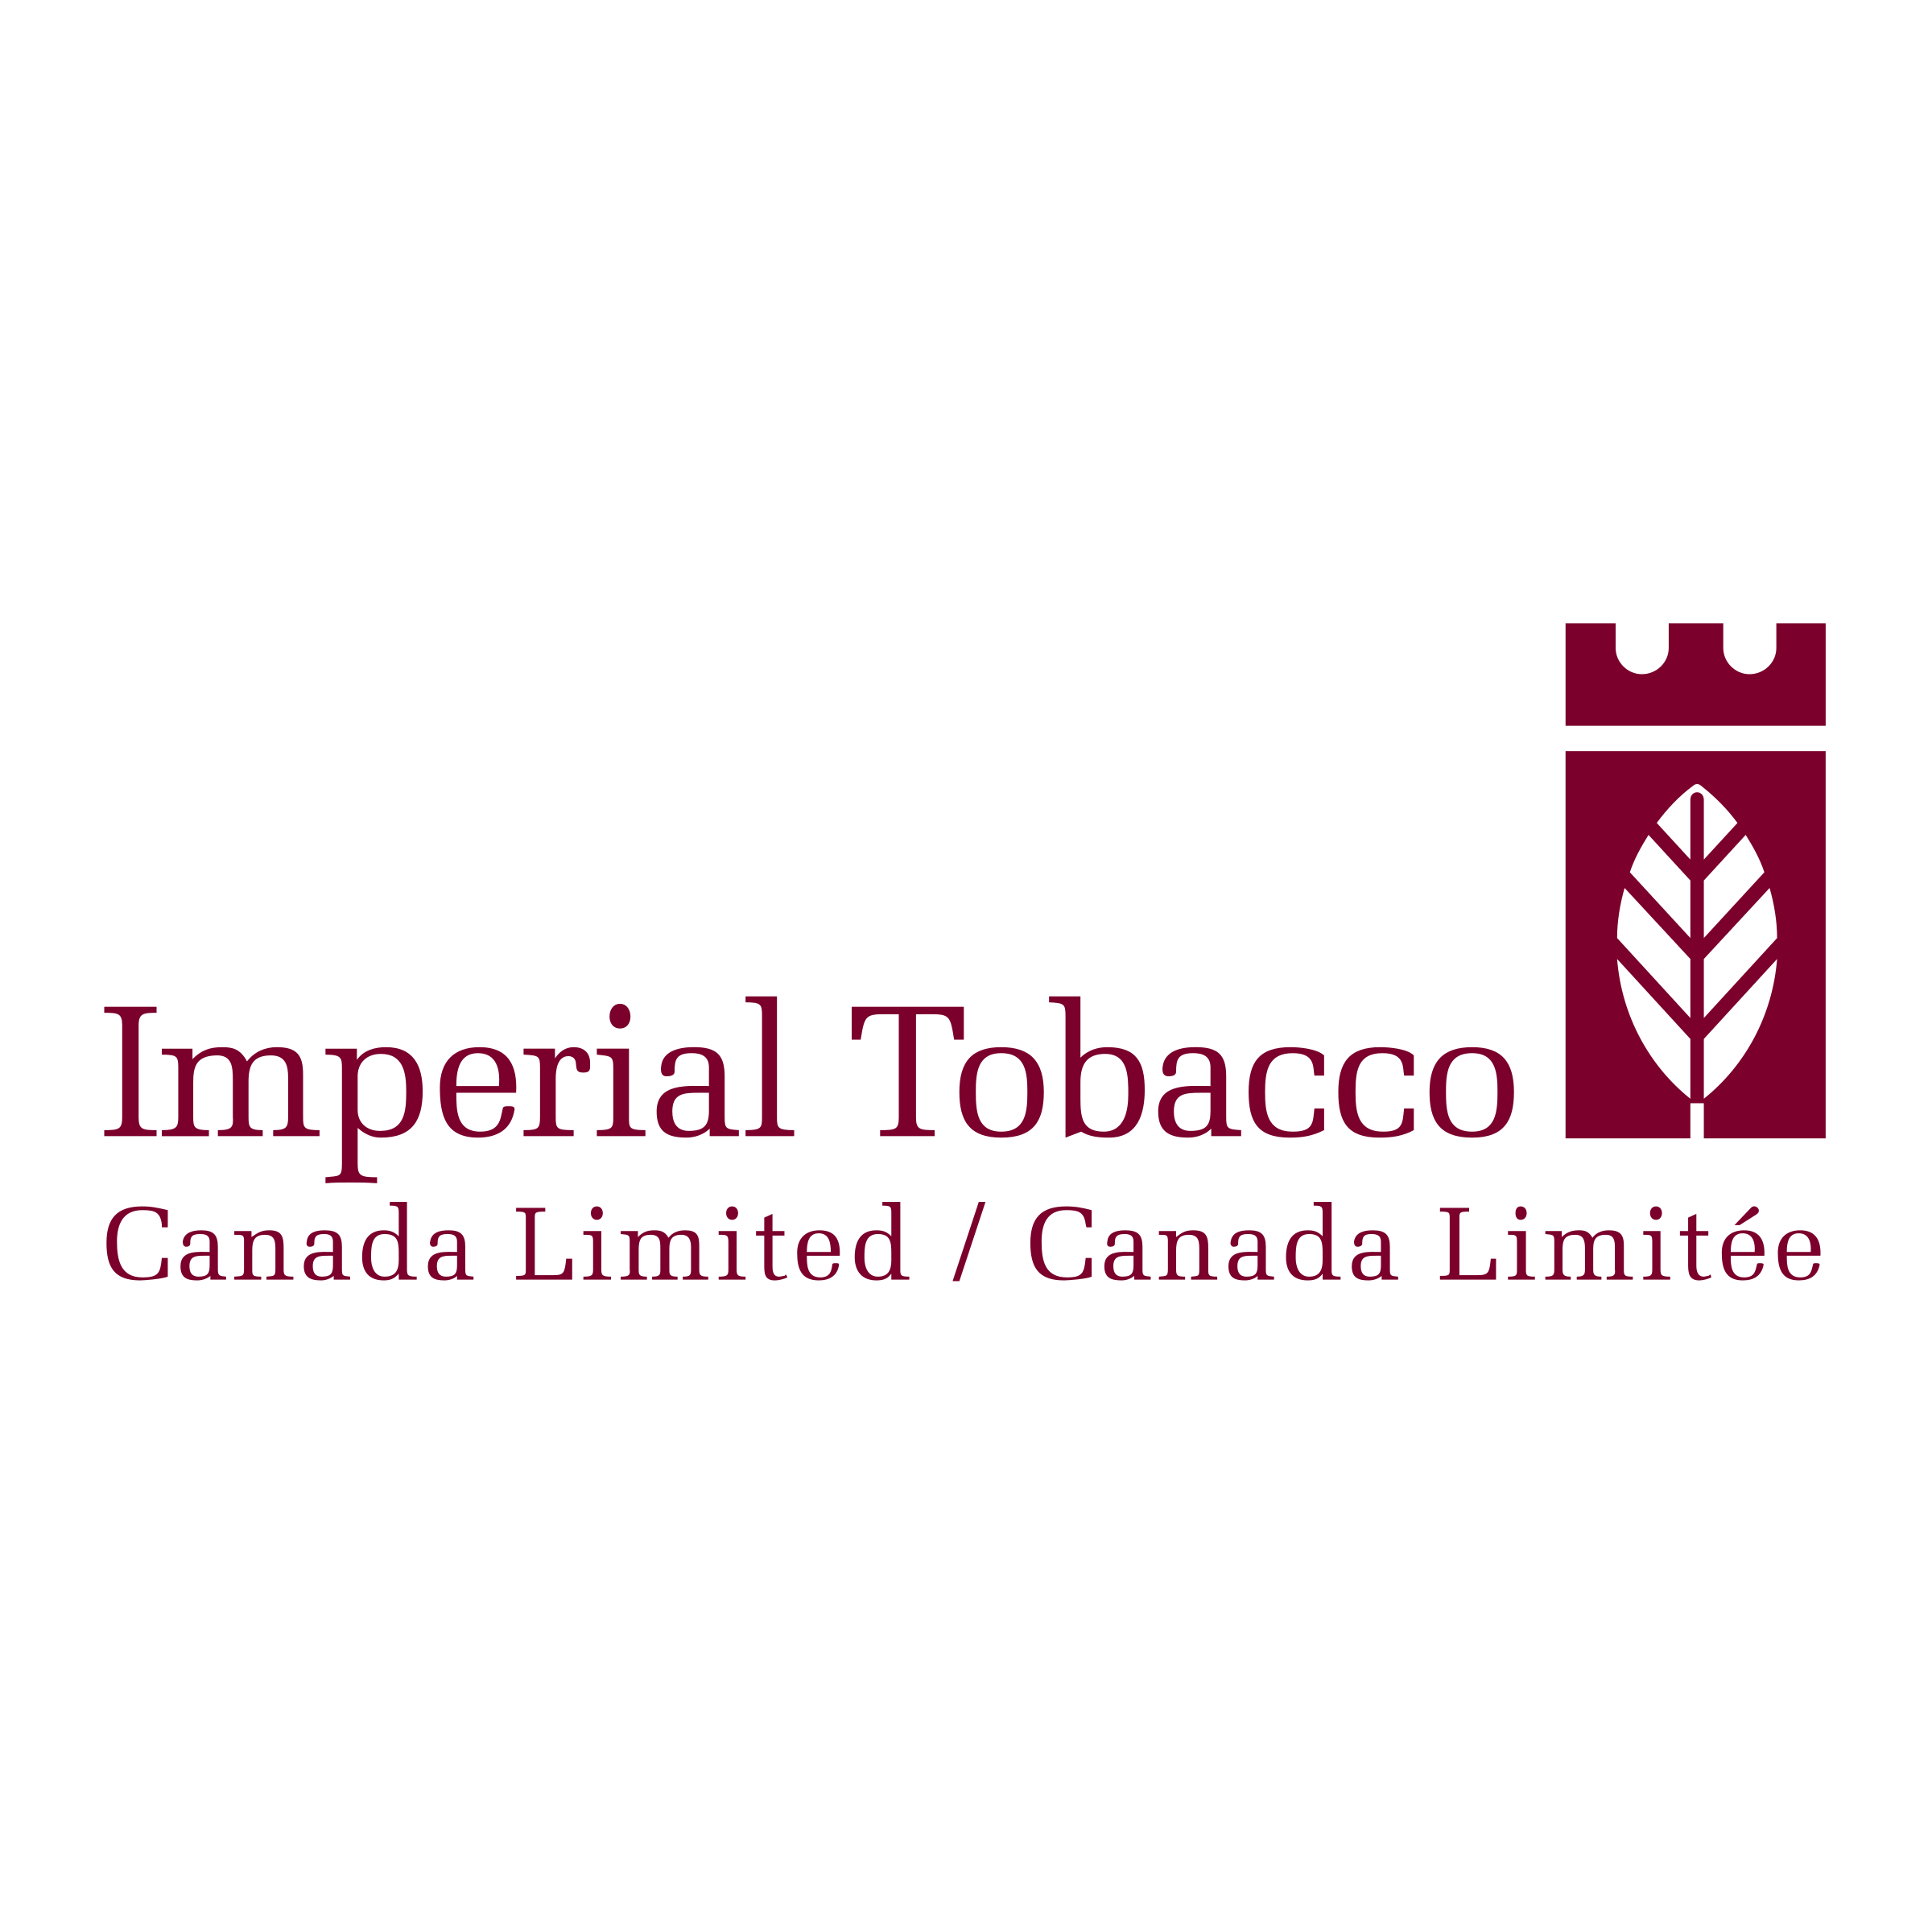 Imperial Tobacco Logo - Imperial Tobacco Canada Logo PNG Transparent & SVG Vector - Freebie ...